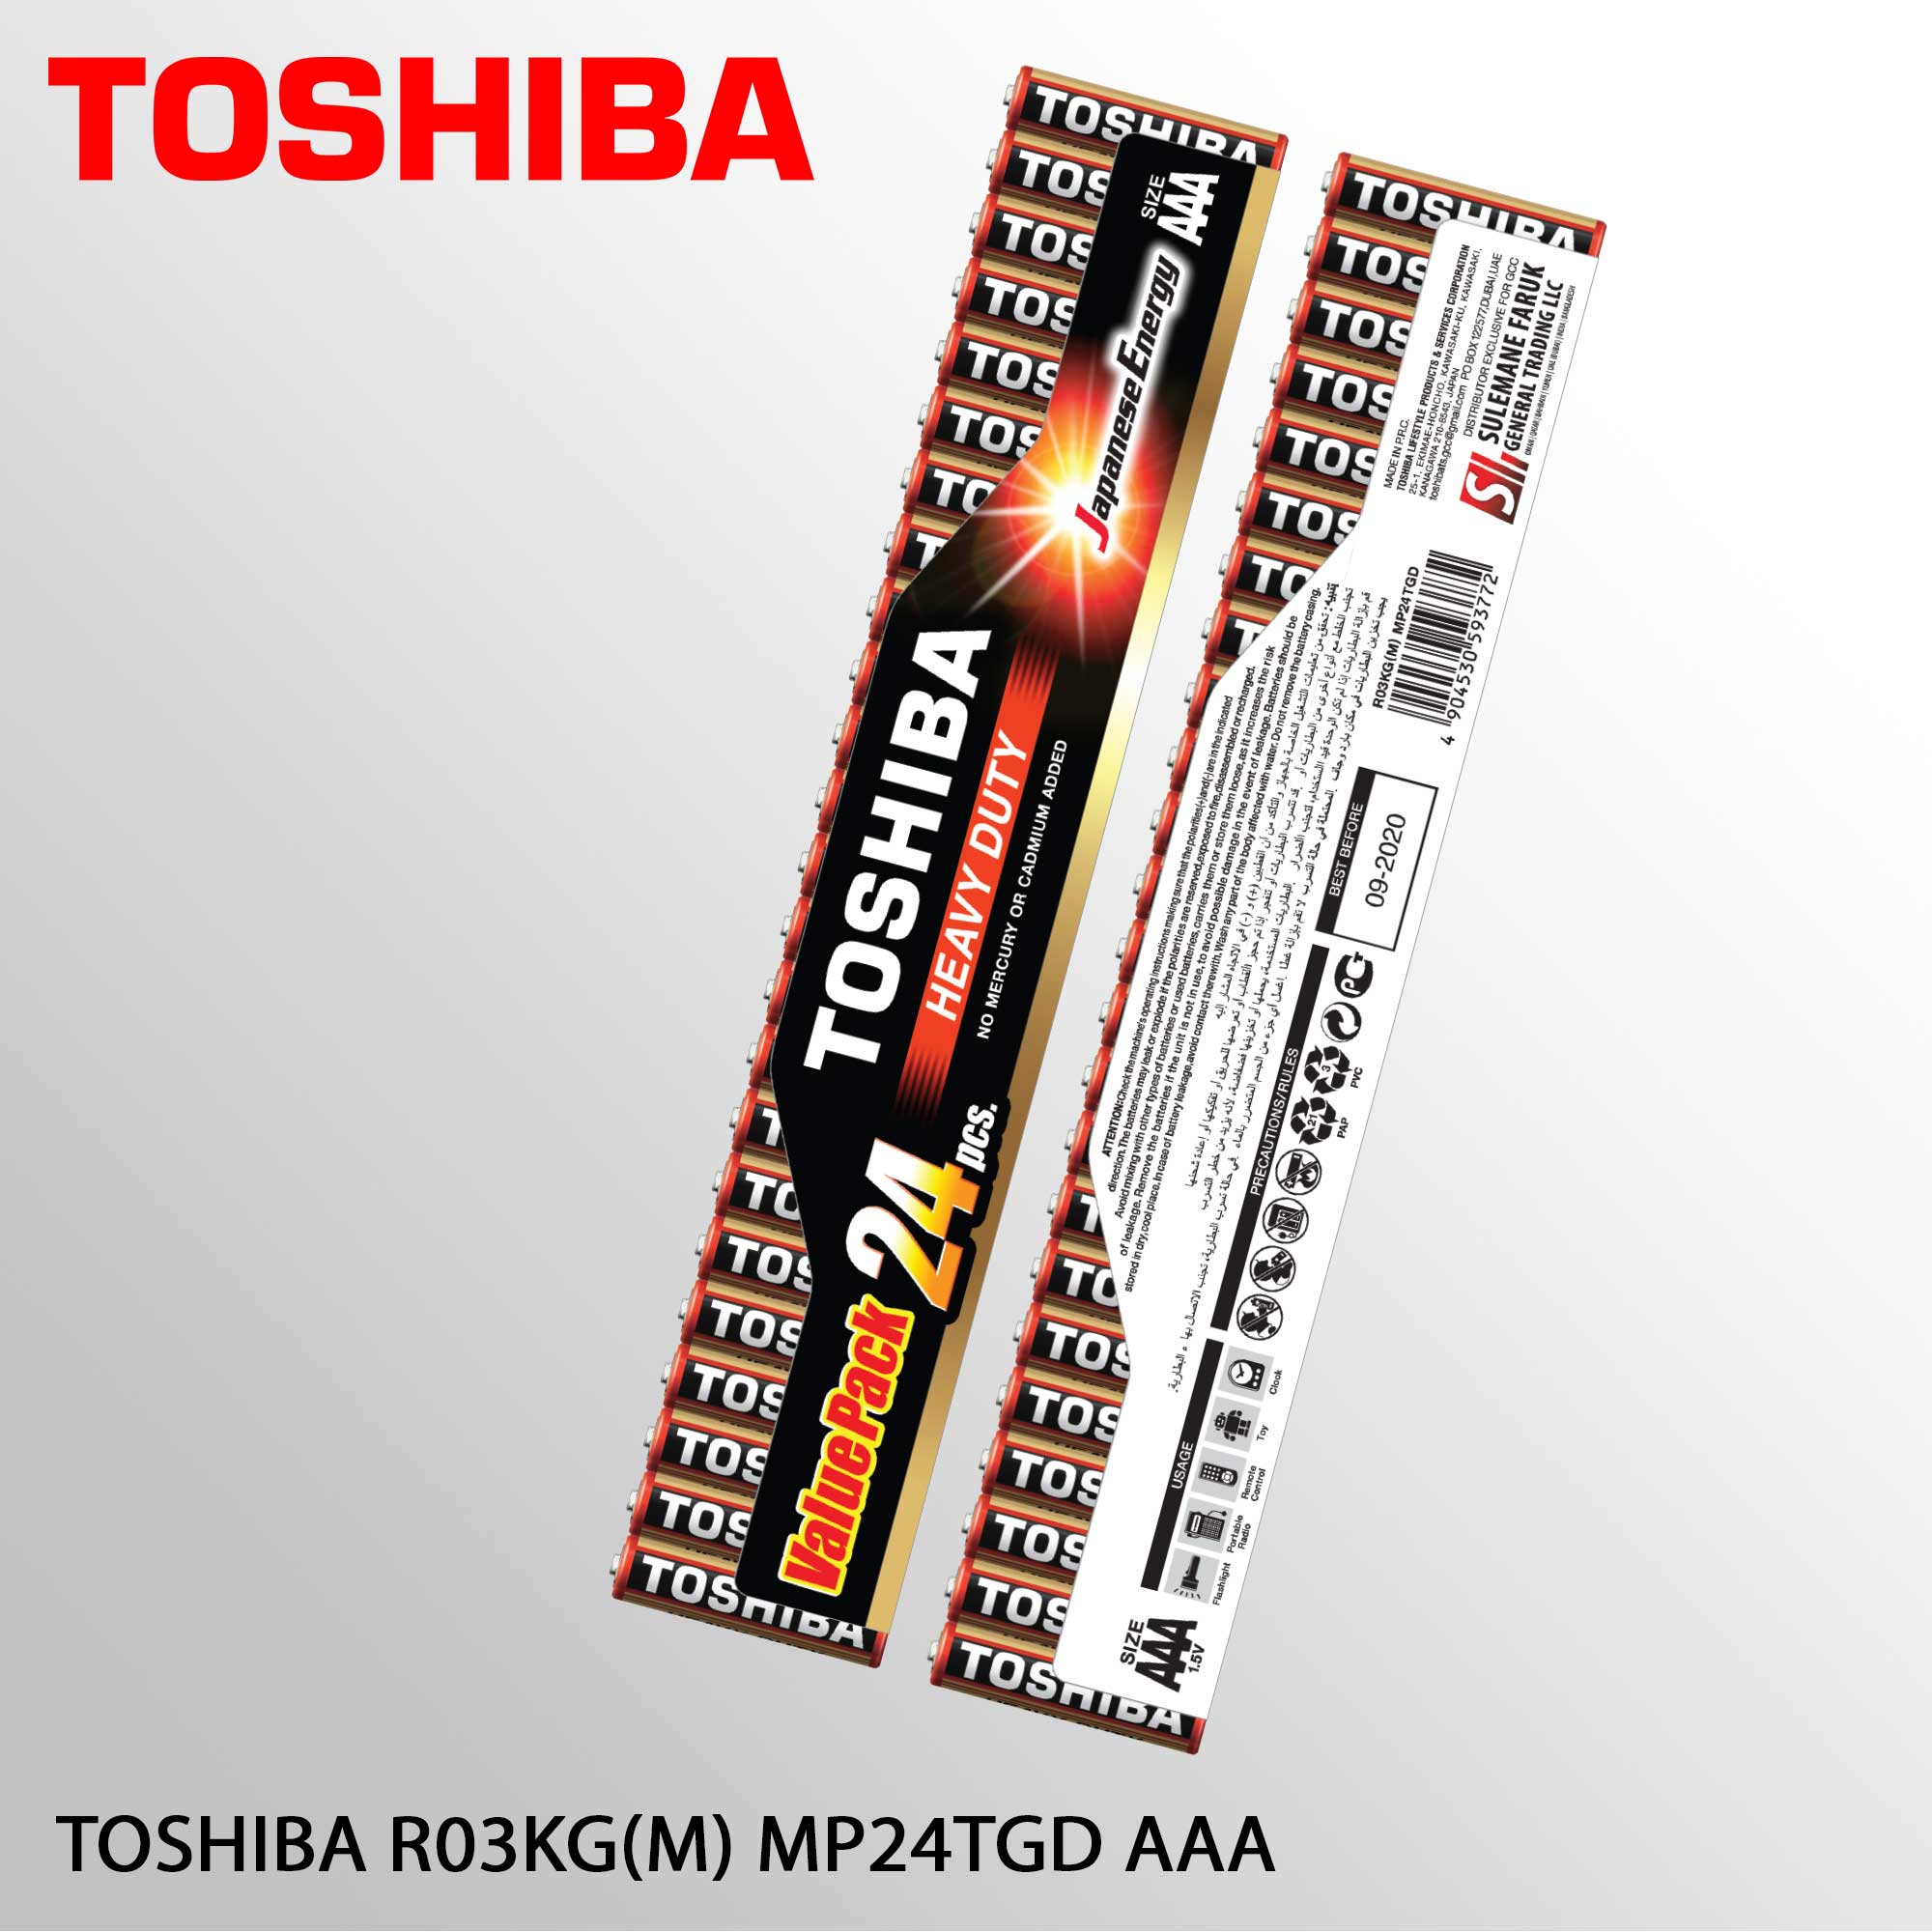 TOSHIBA R03KG(M) MP24TGD AAA